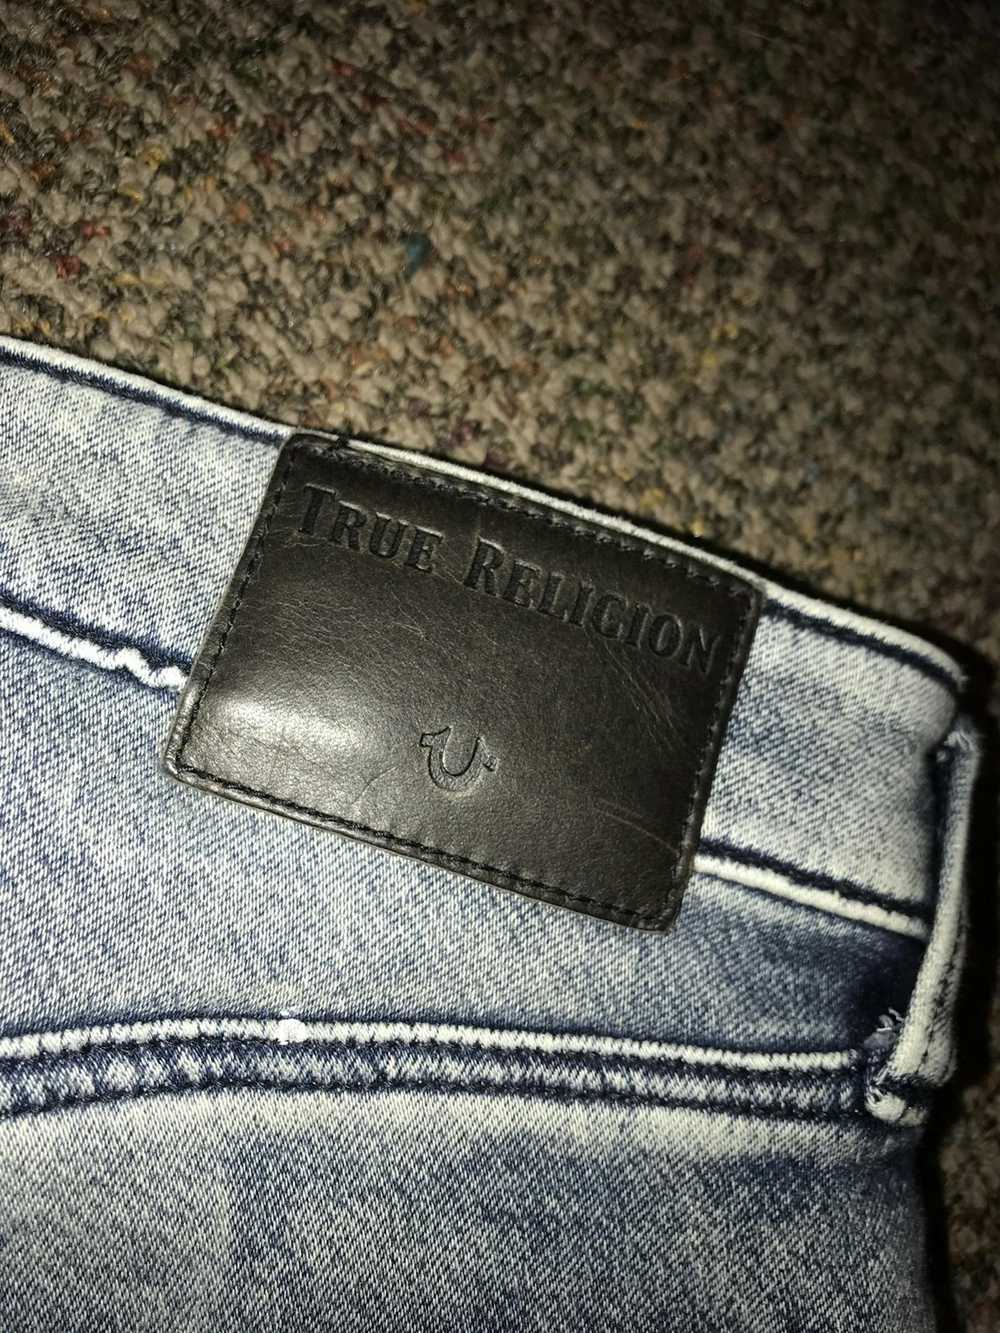 True Religion True Religion Jeans - image 3